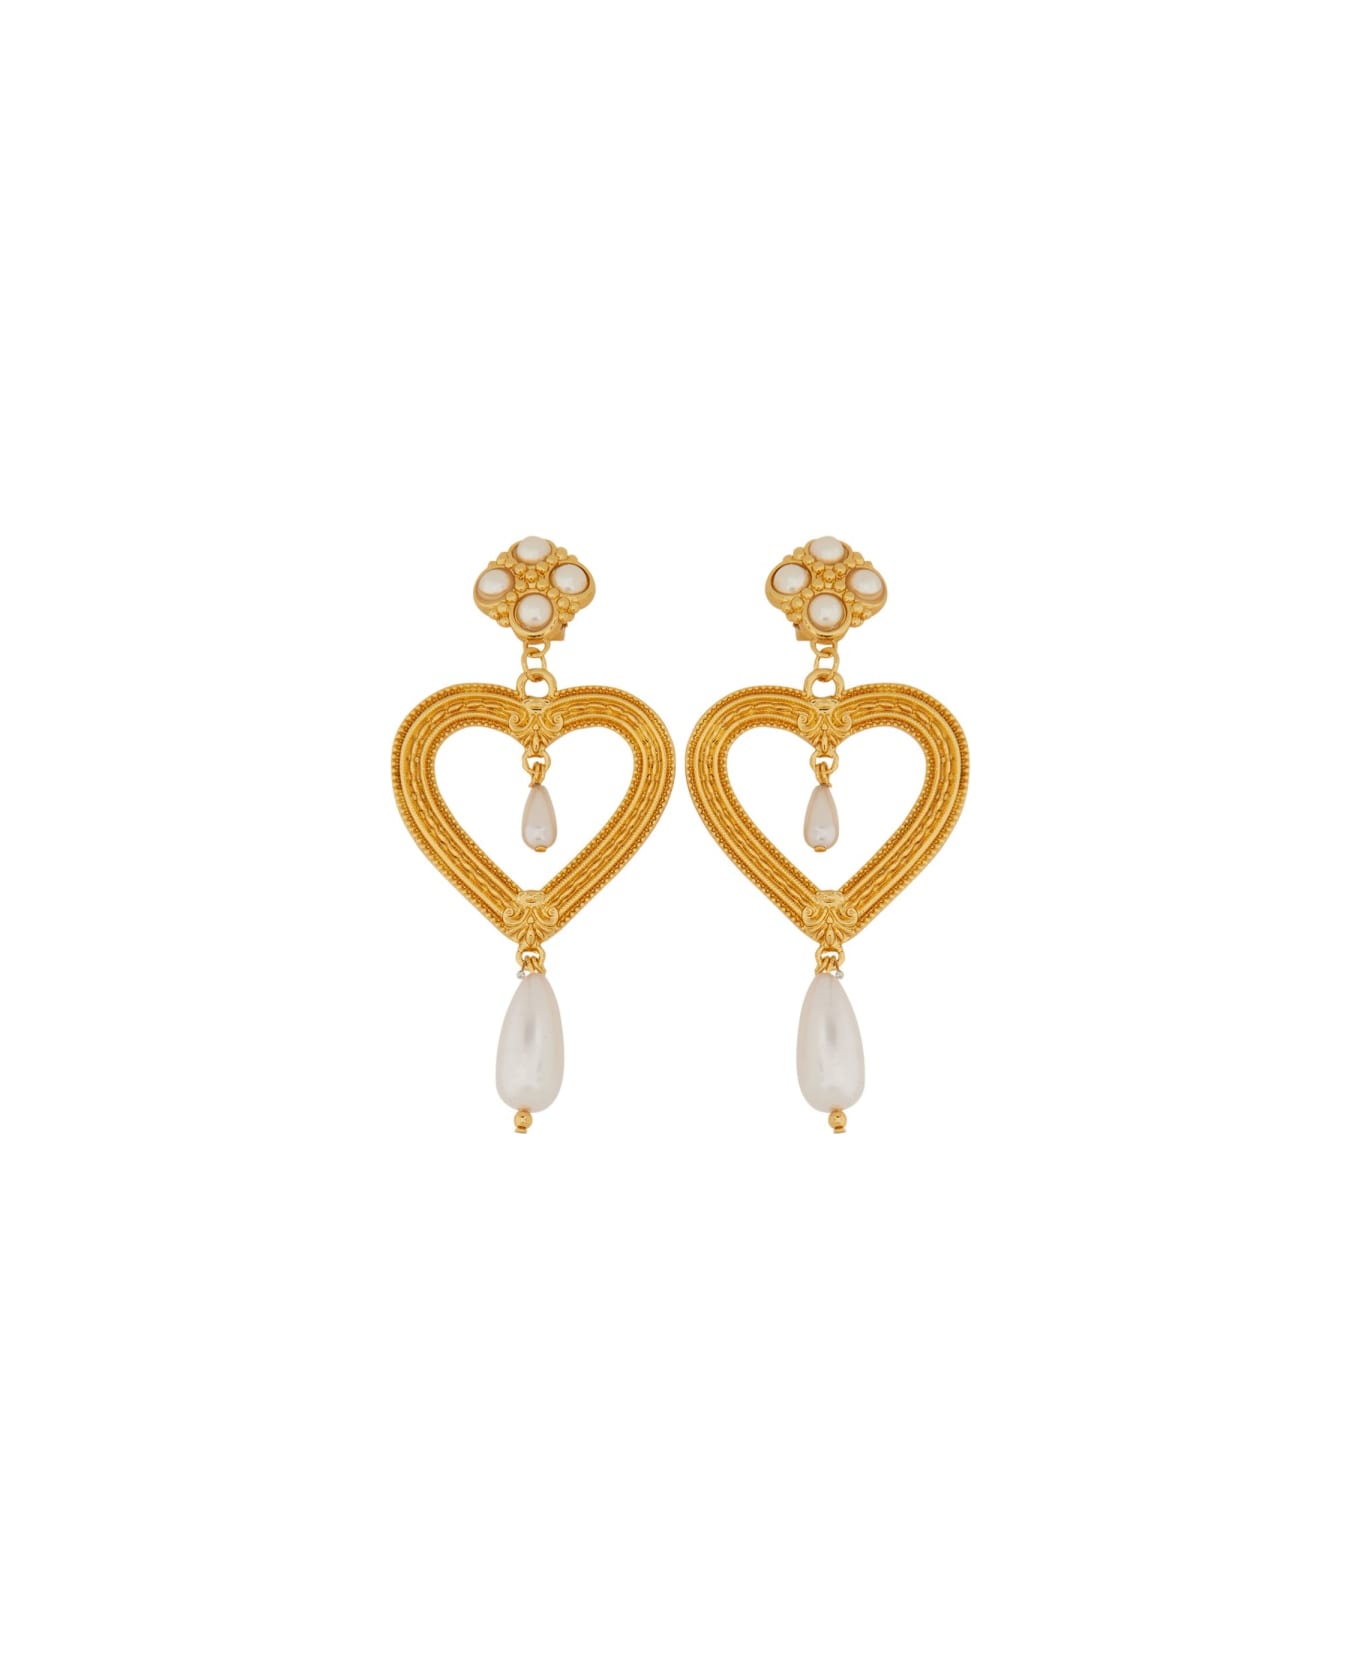 Moschino Earrings "heart" - MULTICOLOUR イヤリング